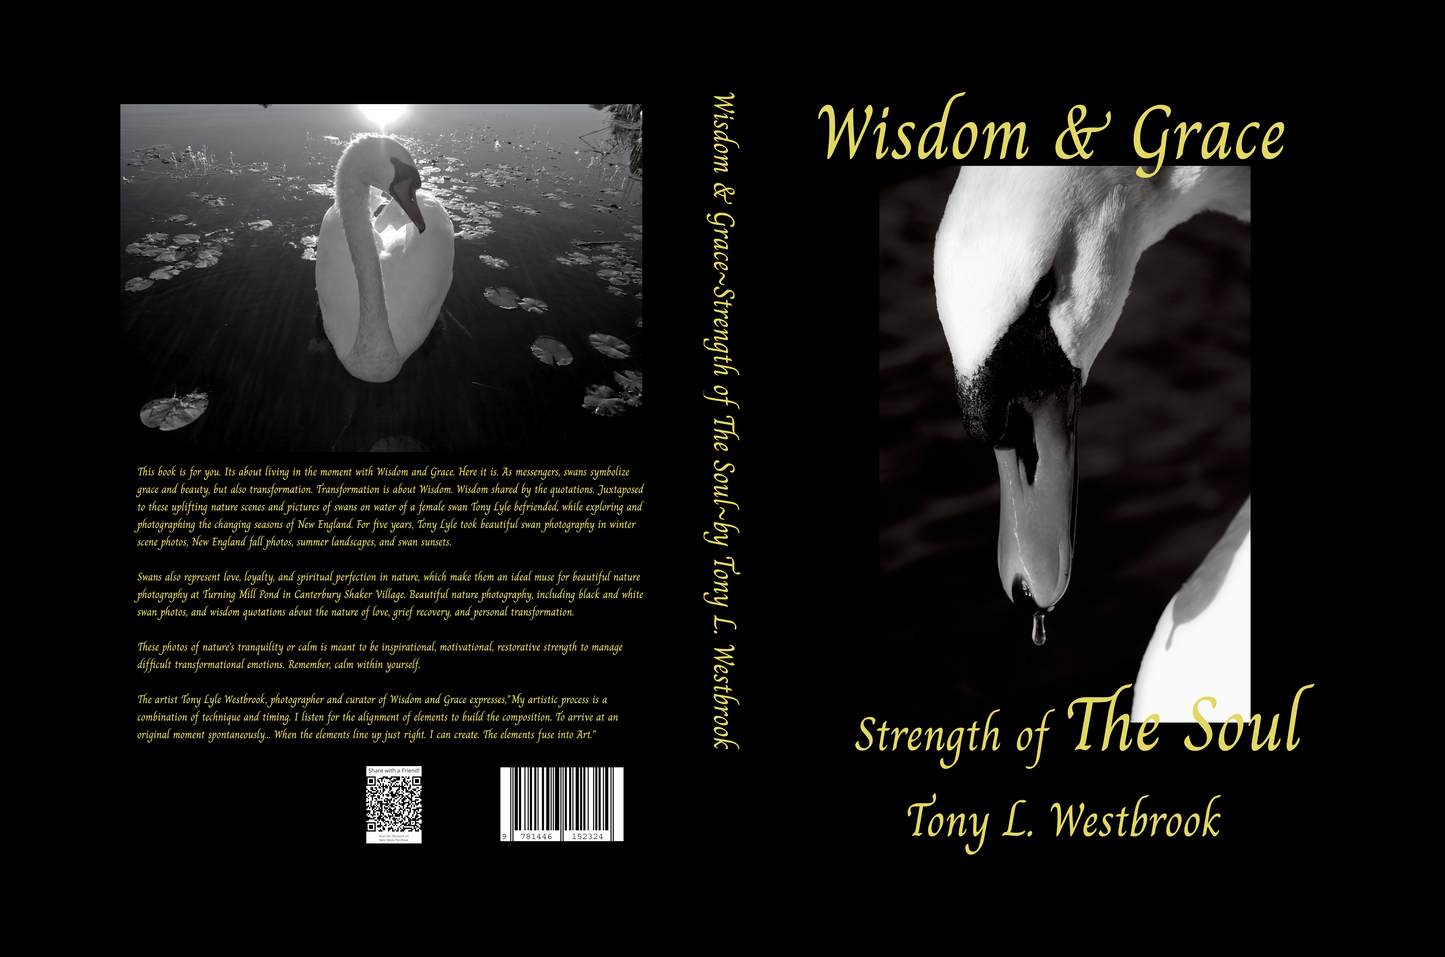 Wisdom & Grace - Strength of the Soul